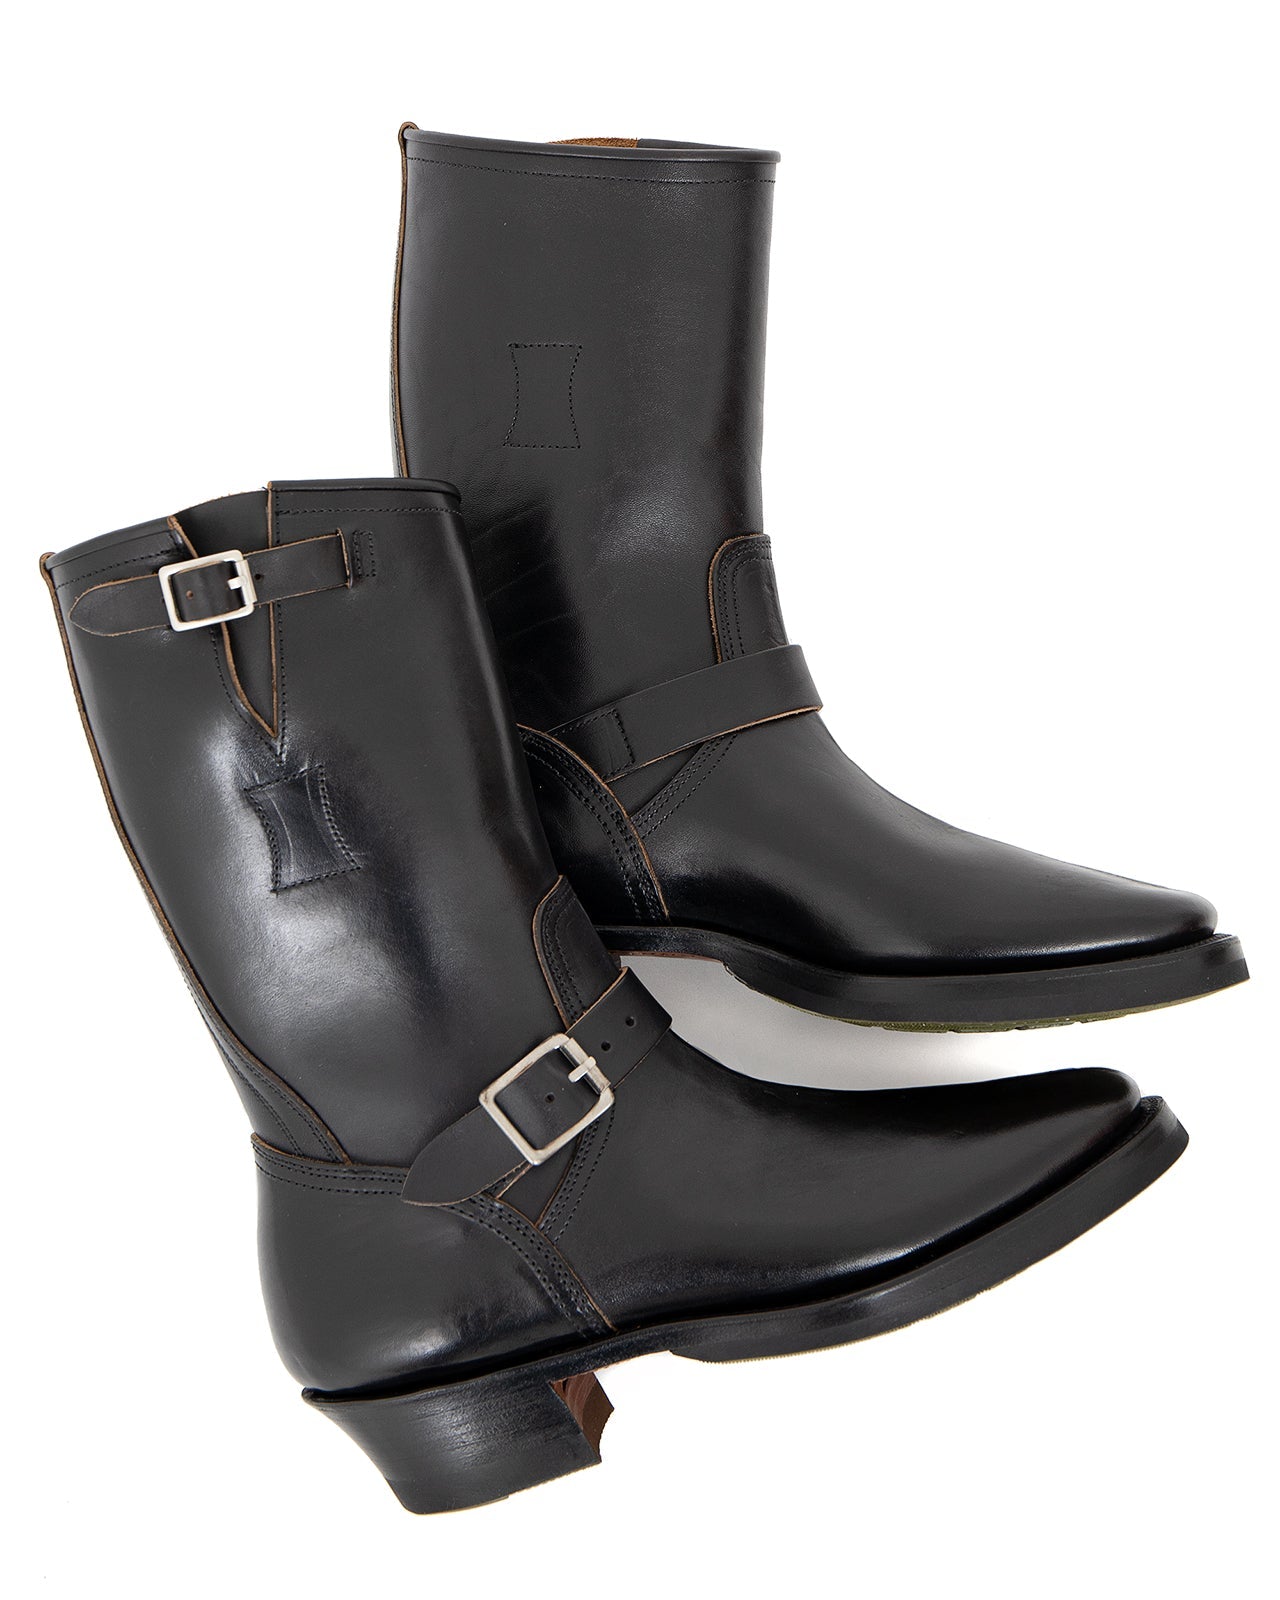 Clinch Engineer Boots, CN Soft Toe, Horsebutt, Overdye Black